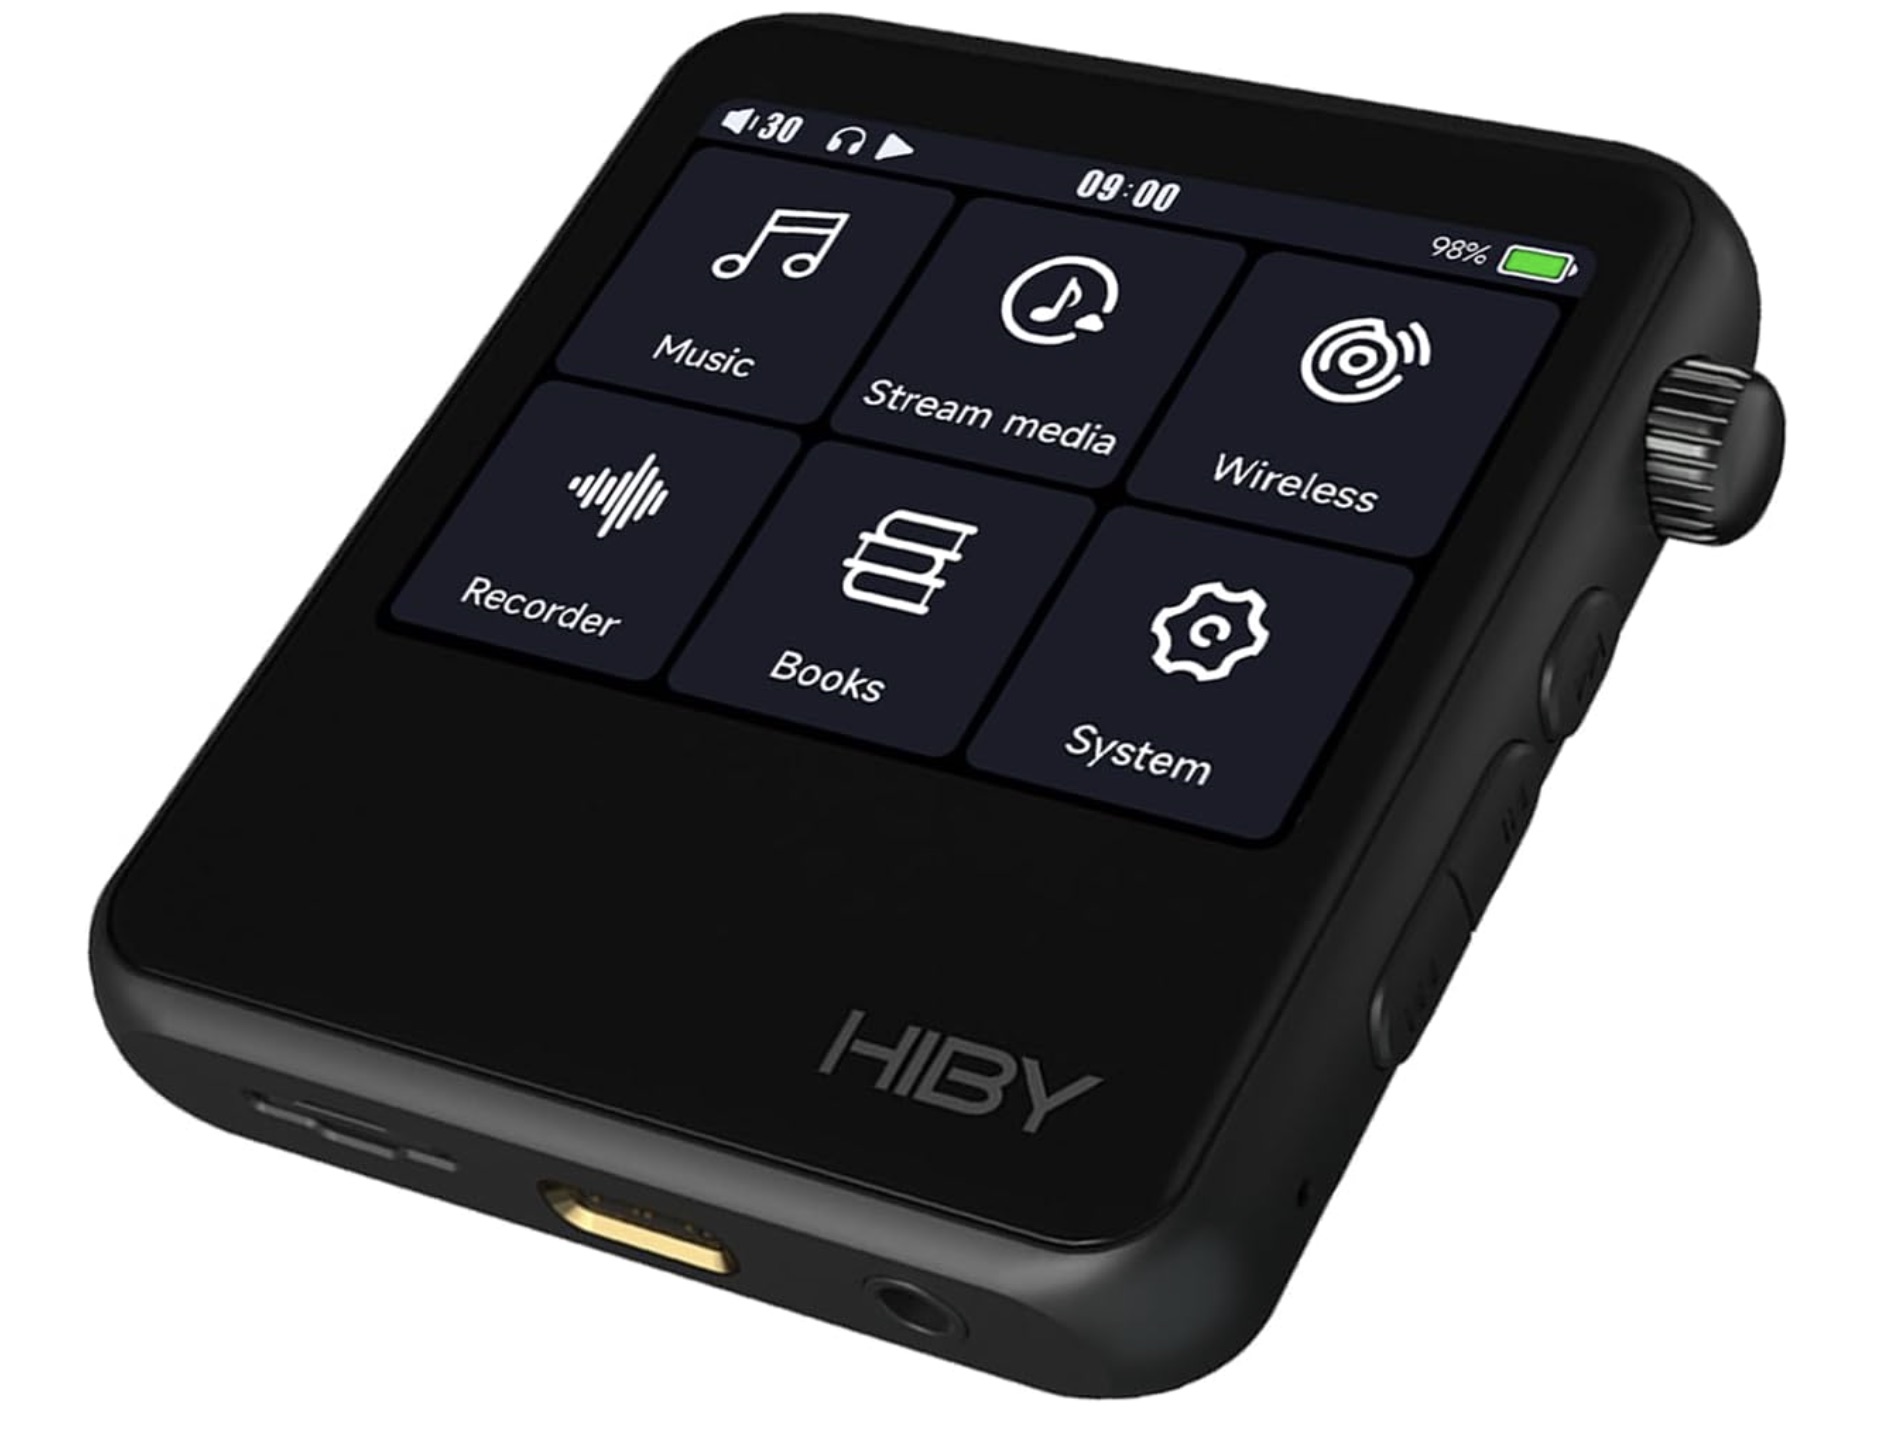 Hiby R2 2 DAP digital audio player